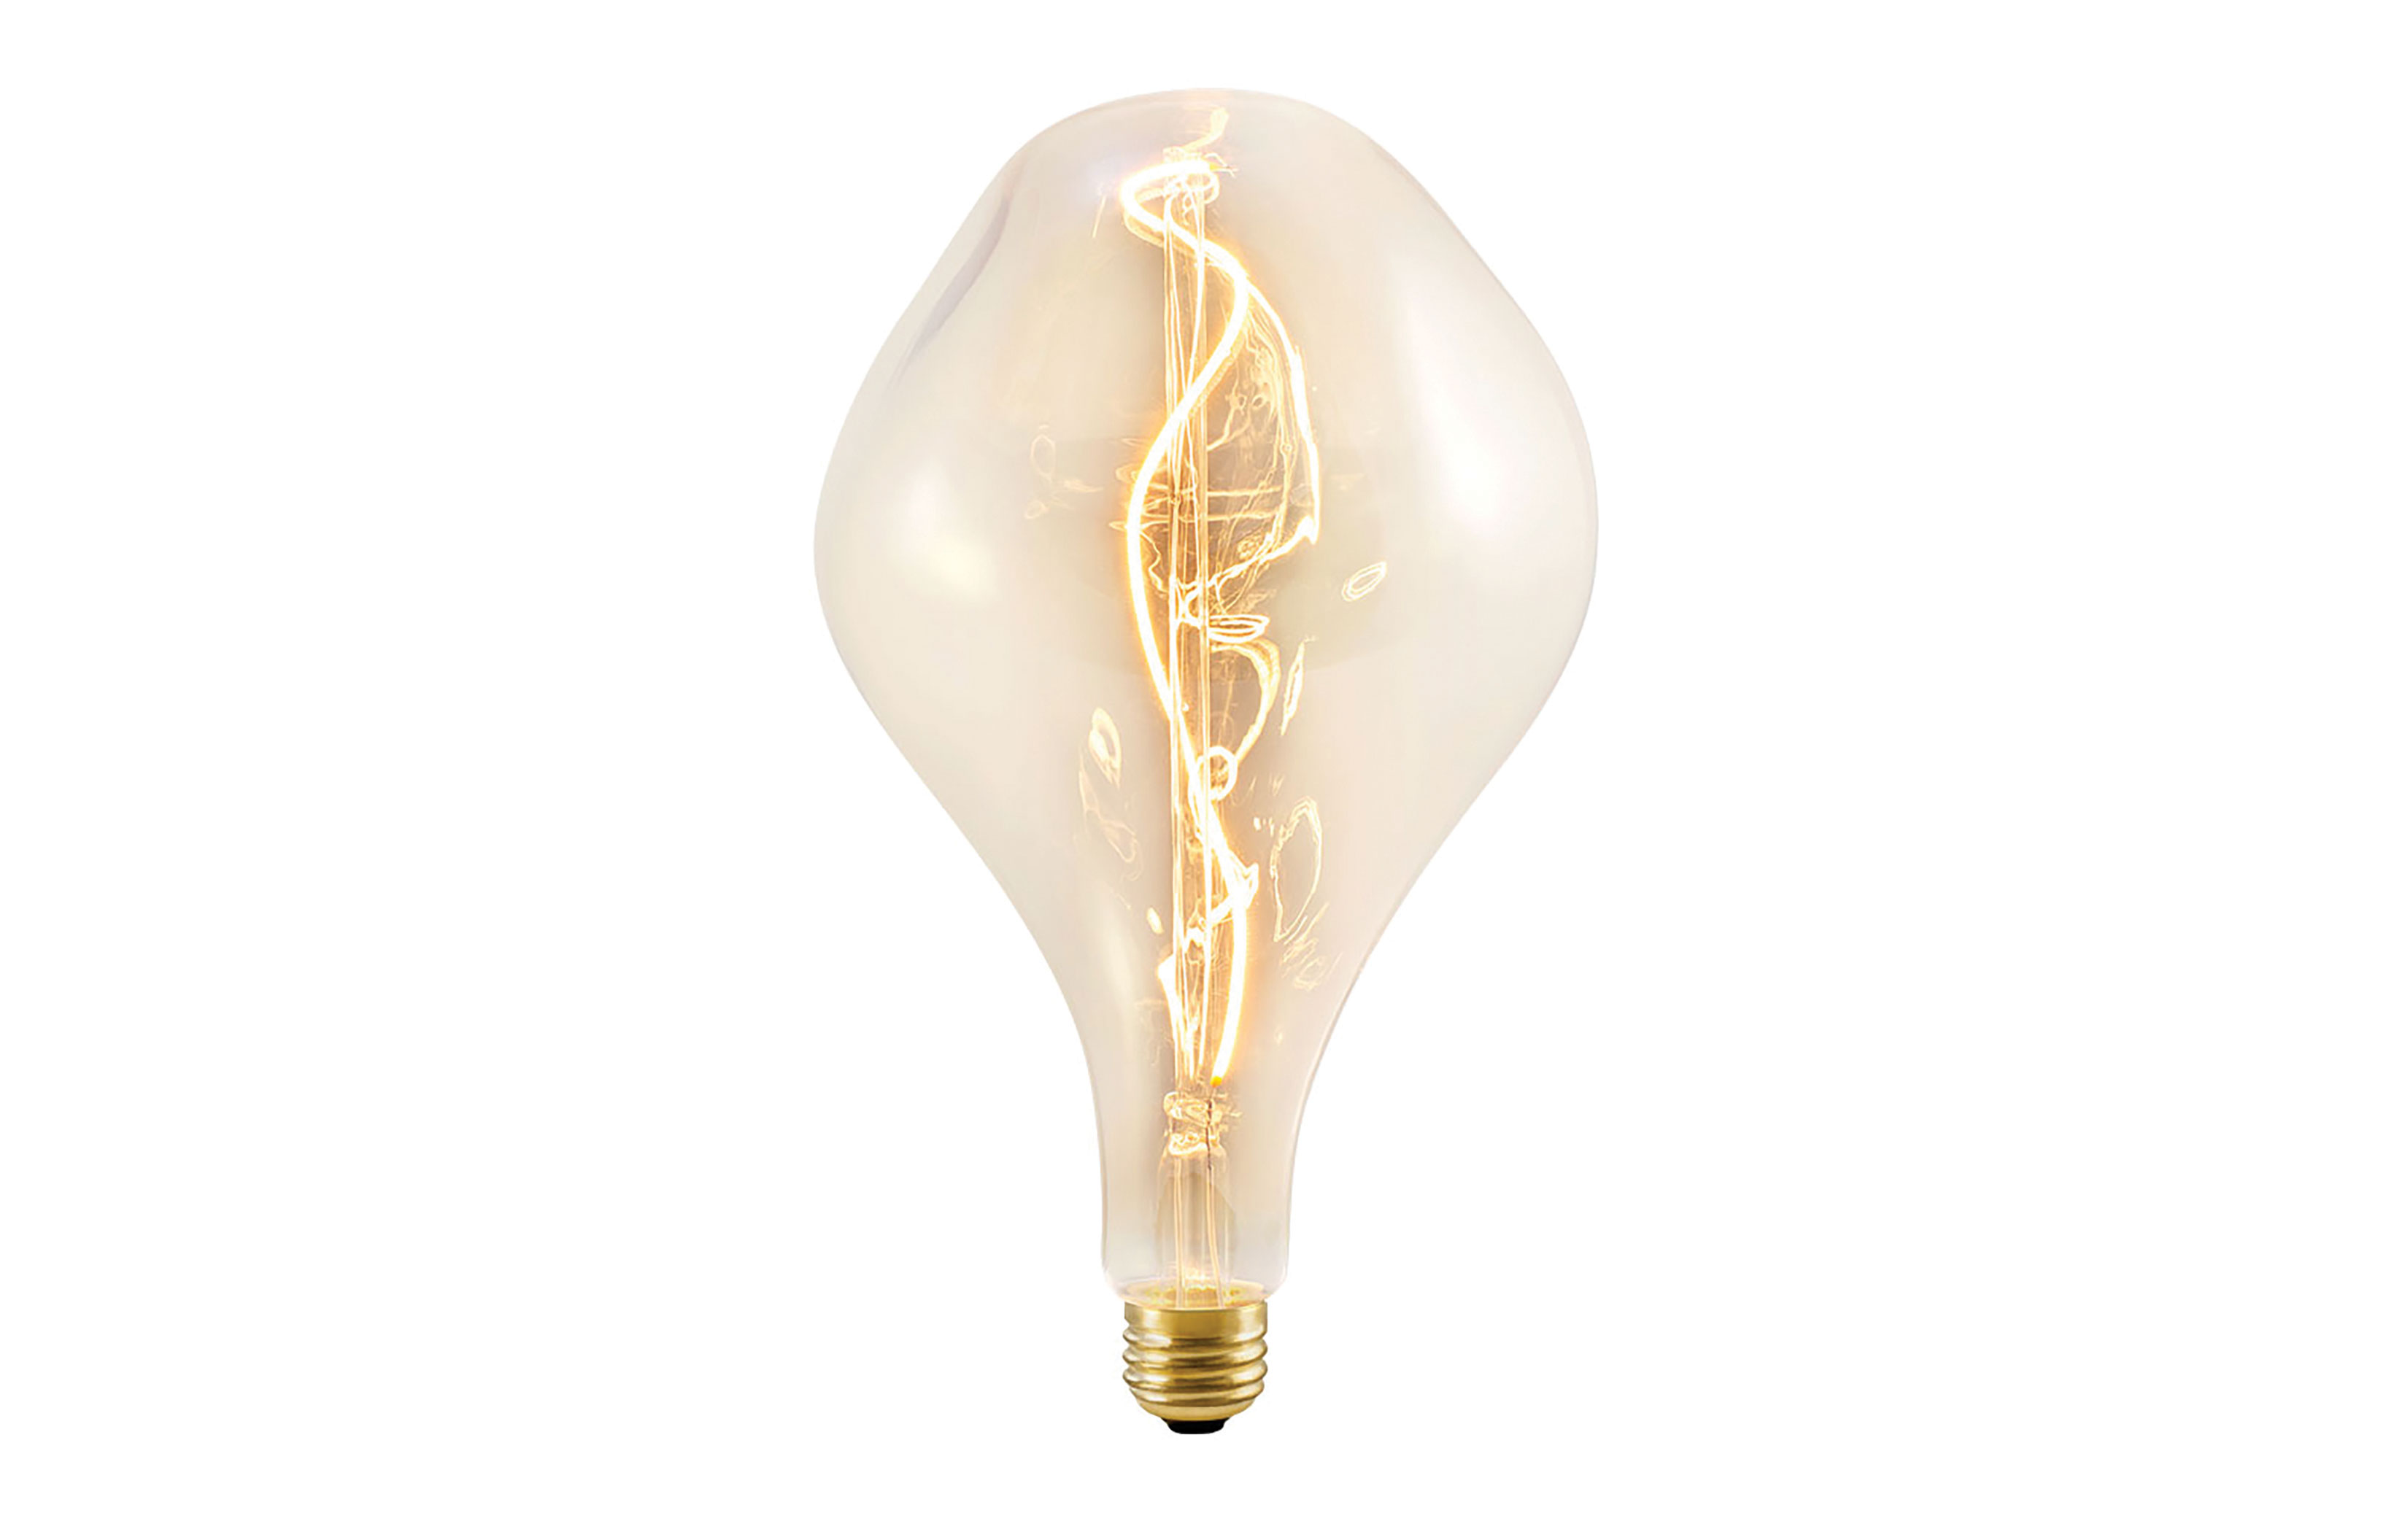 Elongated yellow glass lightbulb. Image by Barn Light Electric.